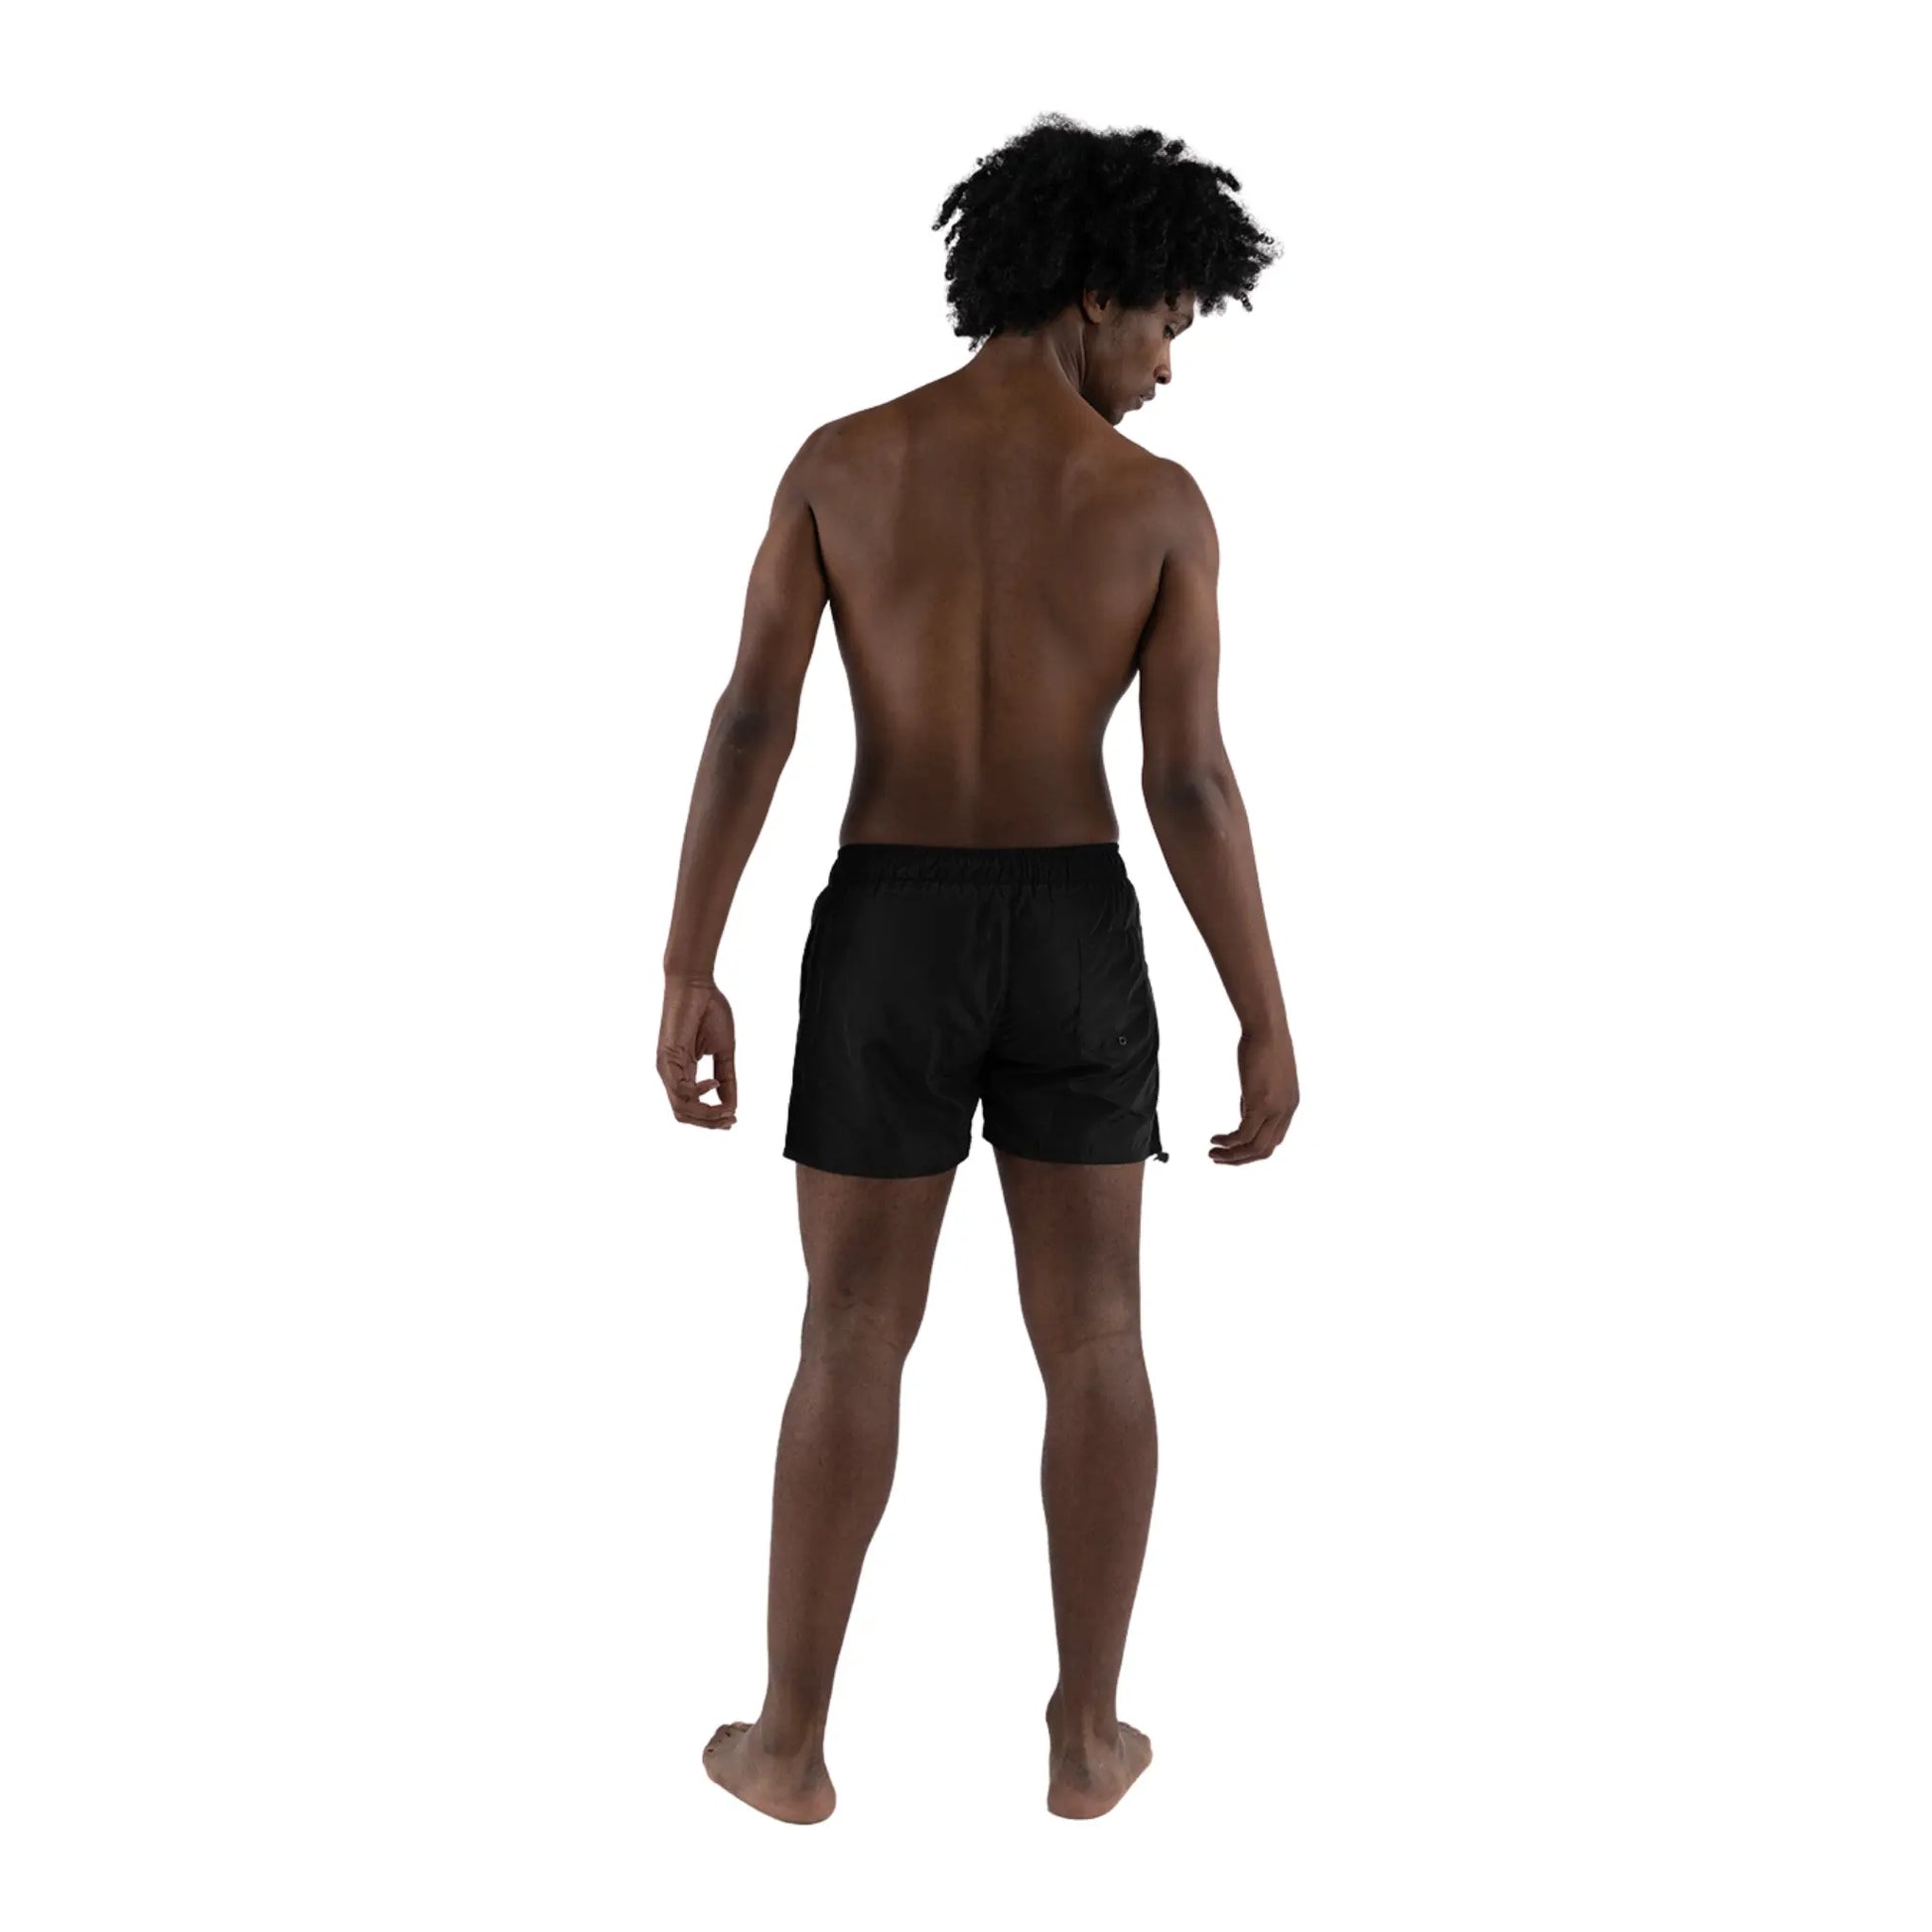 L’Homme Moderne Smiley Swimwear Black worn on black man back view